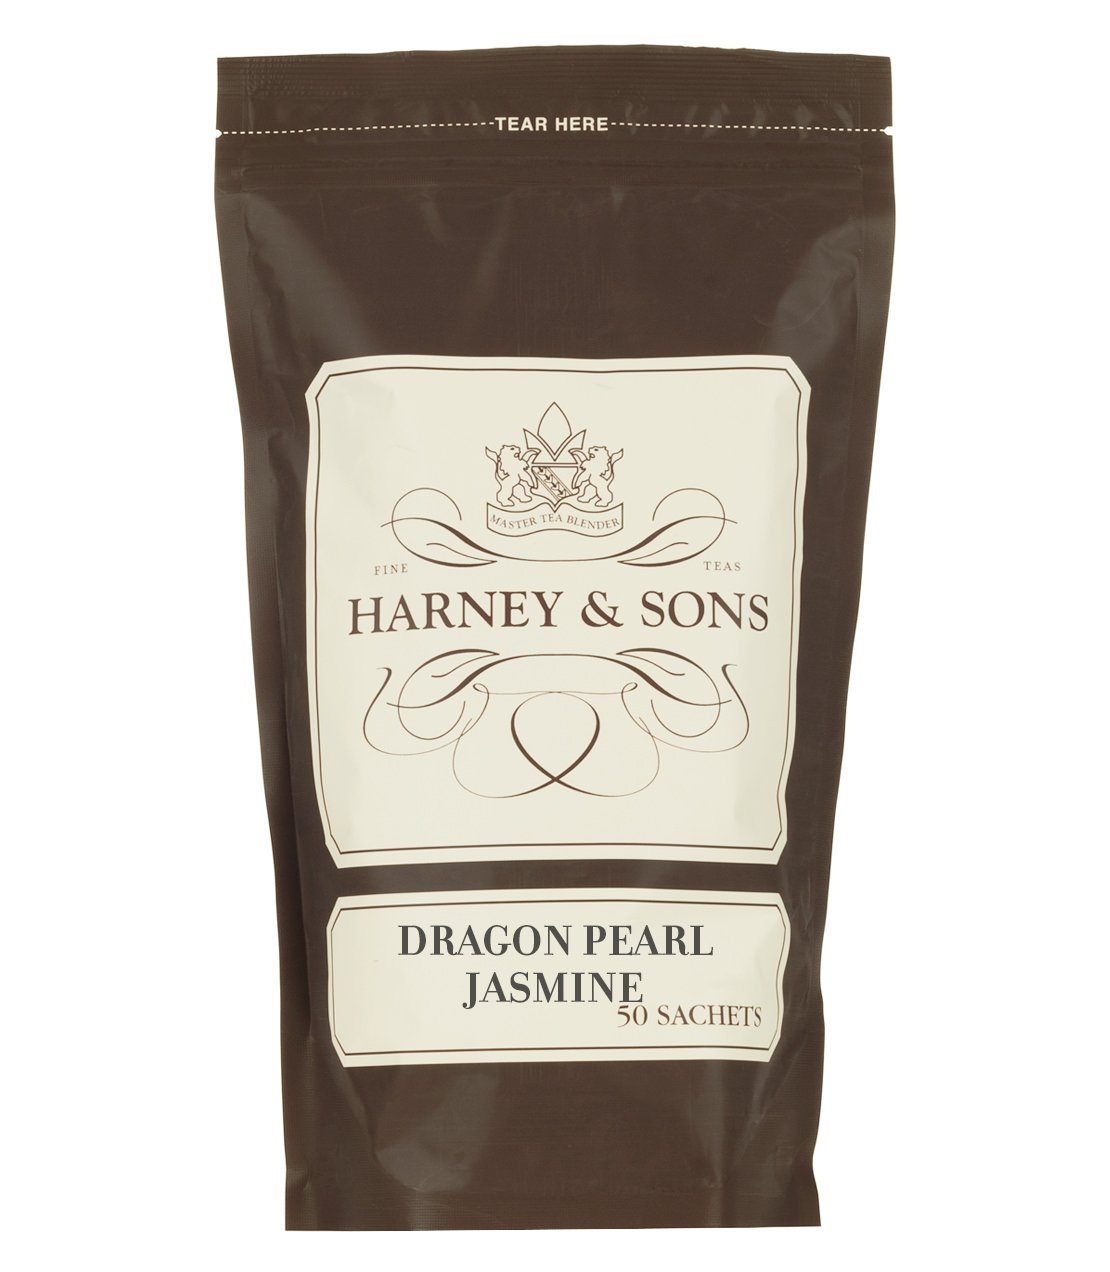 Dragon Pearl Jasmine - Harney & Sons Teas, European Distribution Center